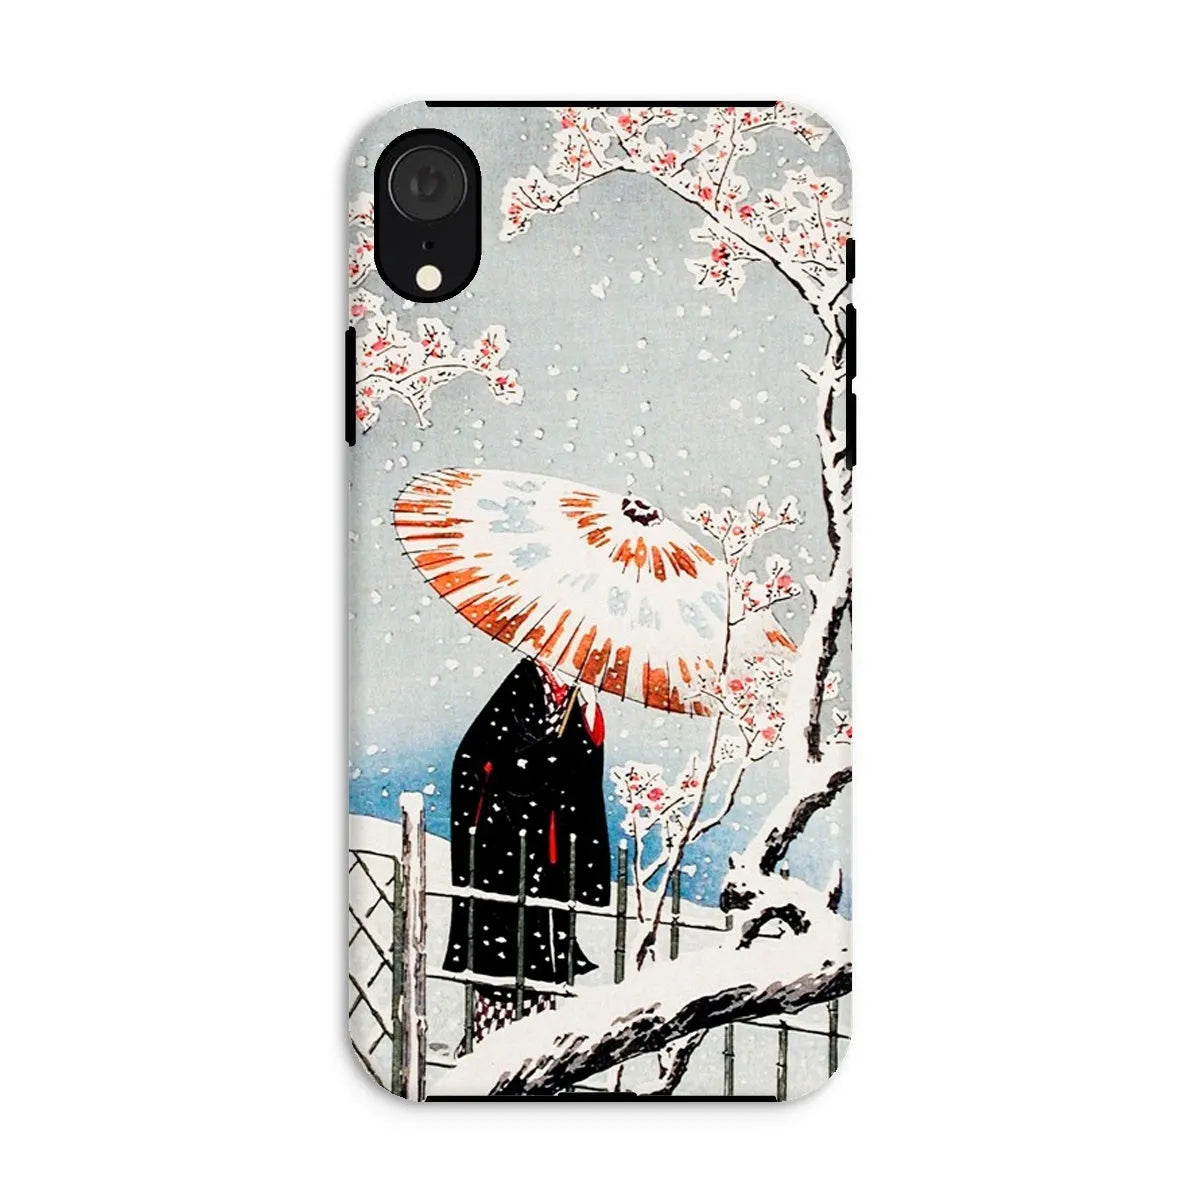 Plum Tree In Snow - Shin-hanga Phone Case - Hiroaki Takahashi - Iphone Xr / Matte - Mobile Phone Cases - Aesthetic Art